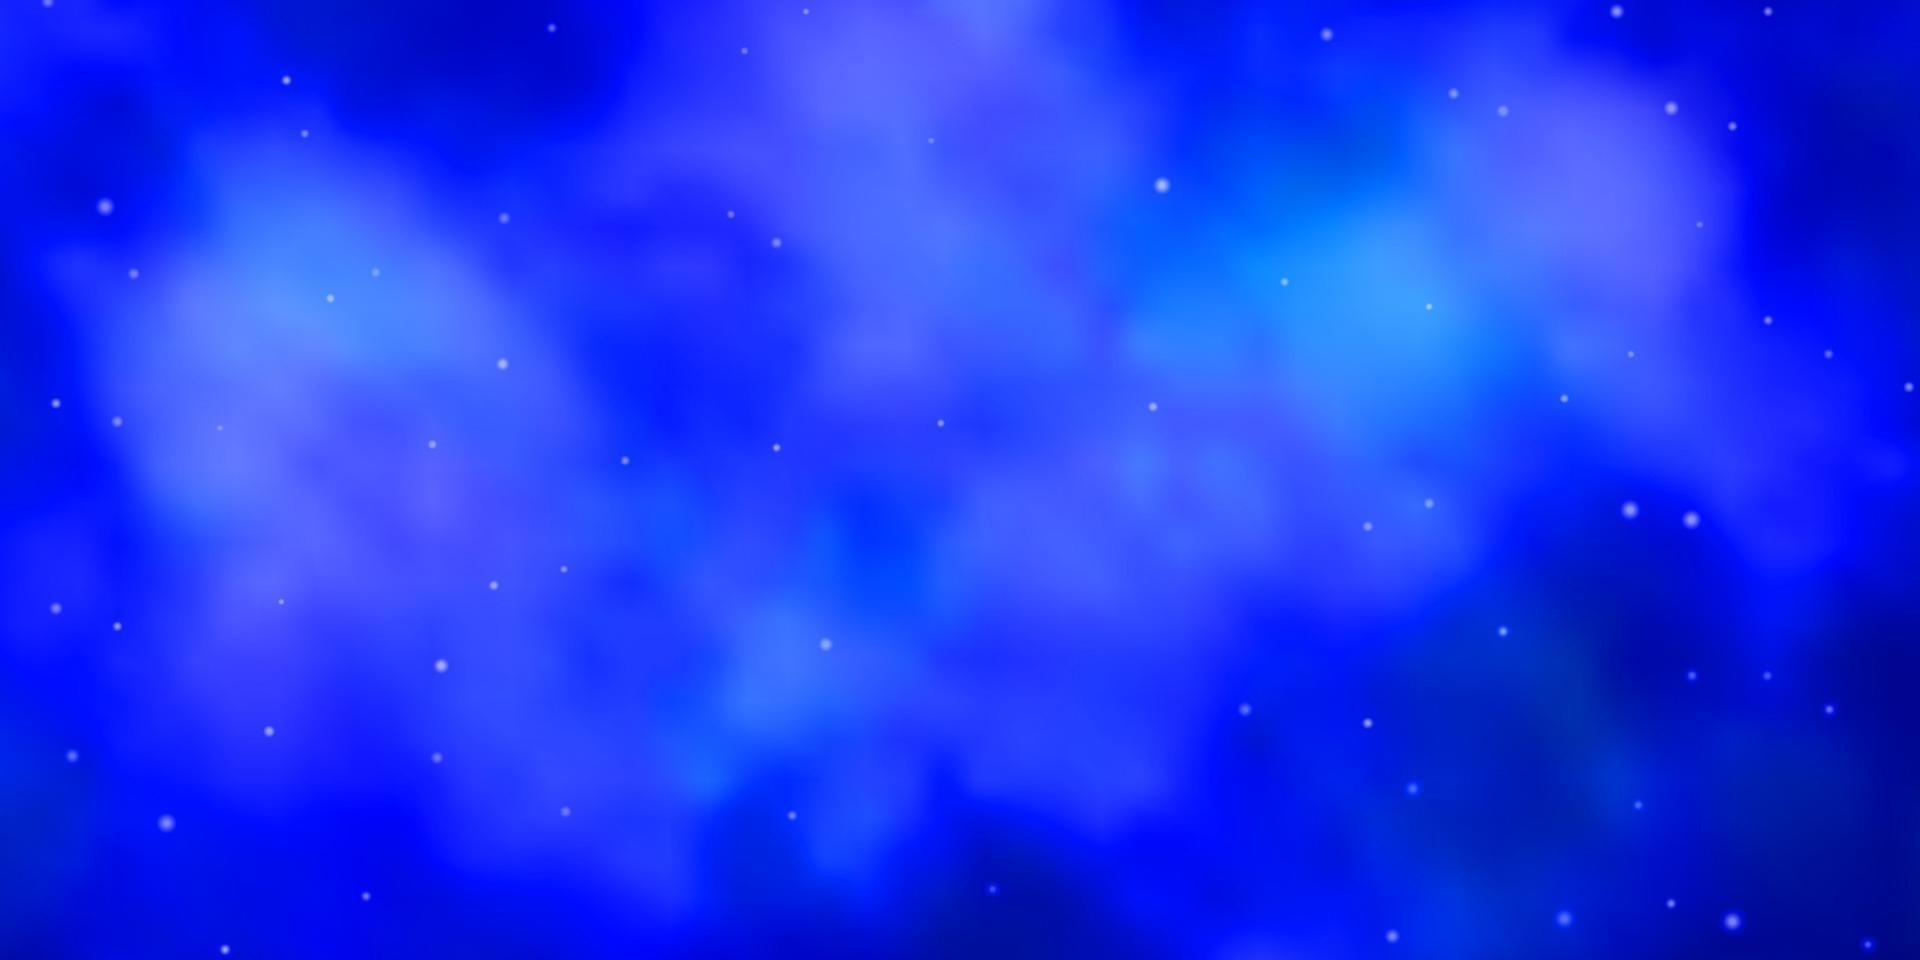 fundo vector azul claro com estrelas coloridas.